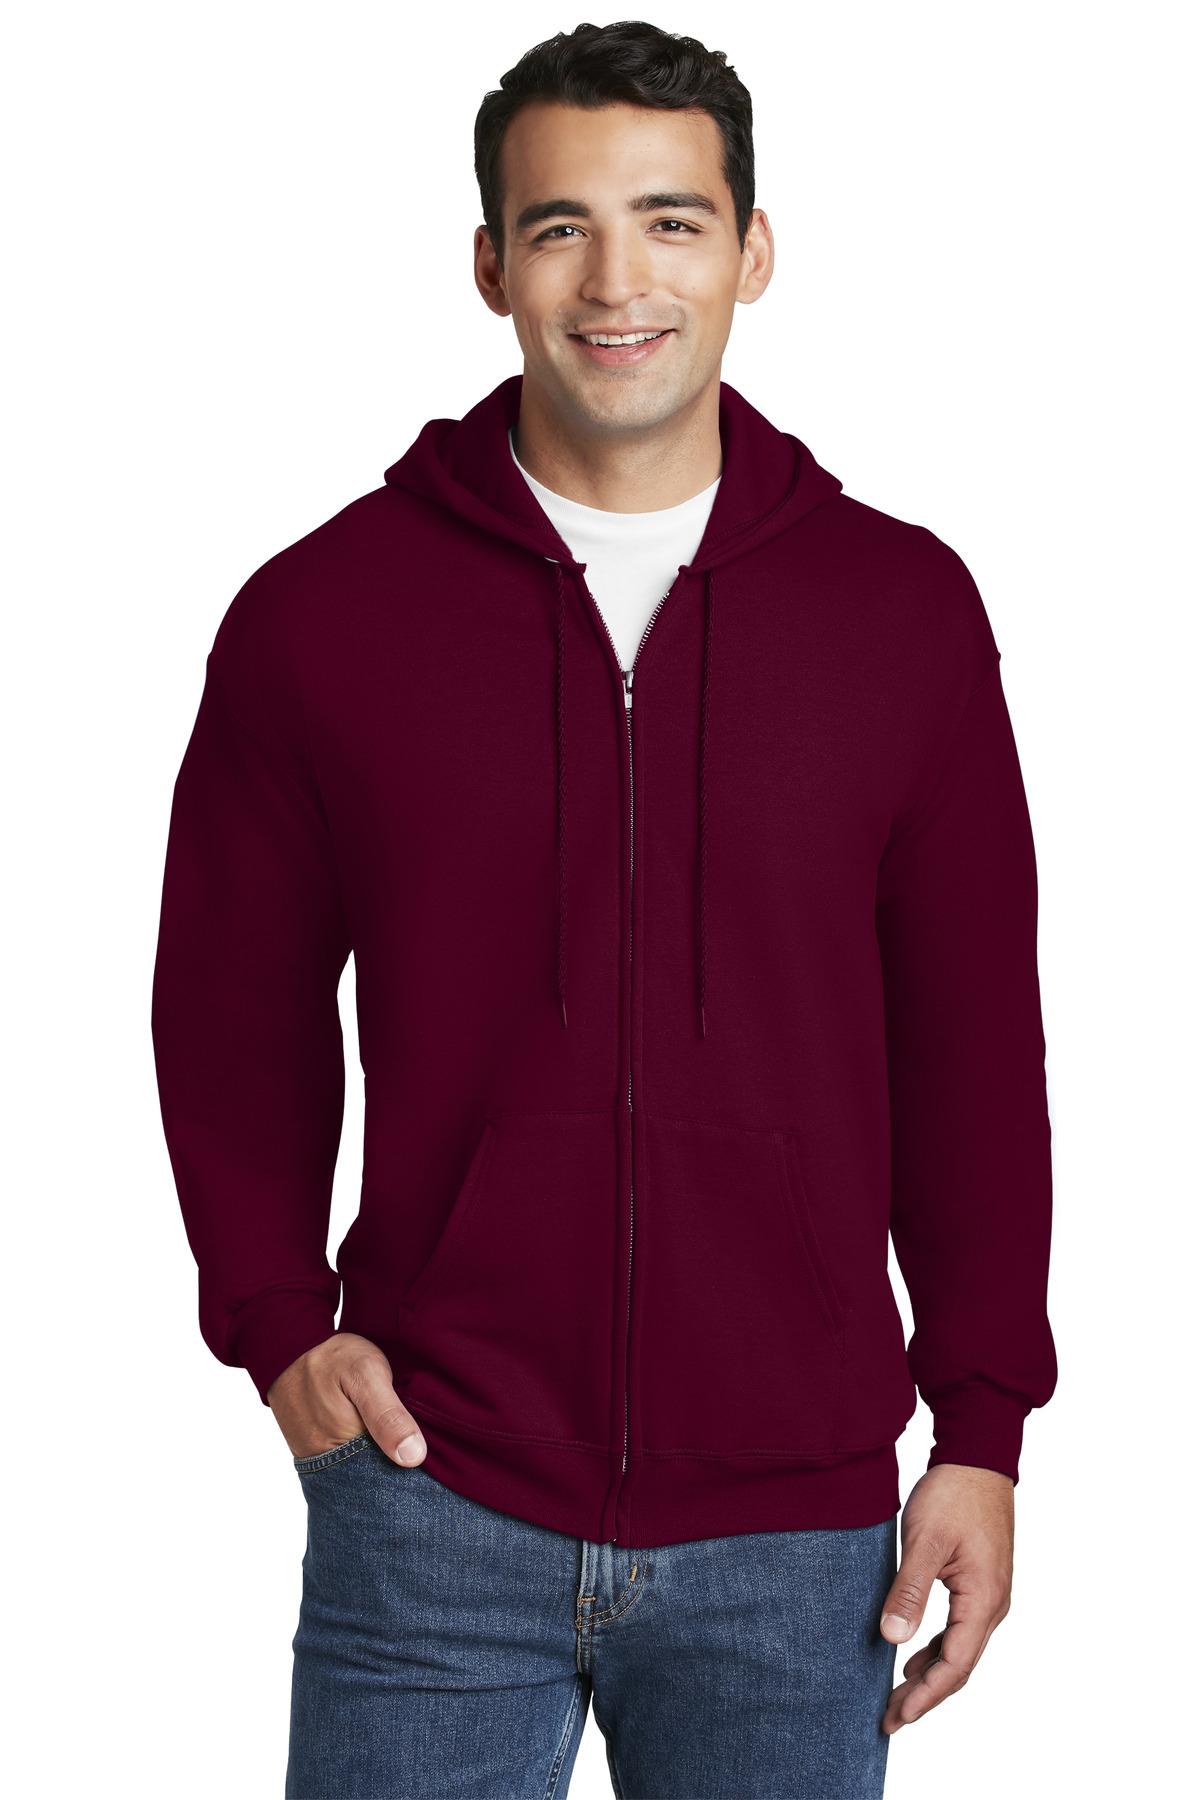 Hanes Ultimate Cotton - Full-Zip Hooded Sweatshirt - F283